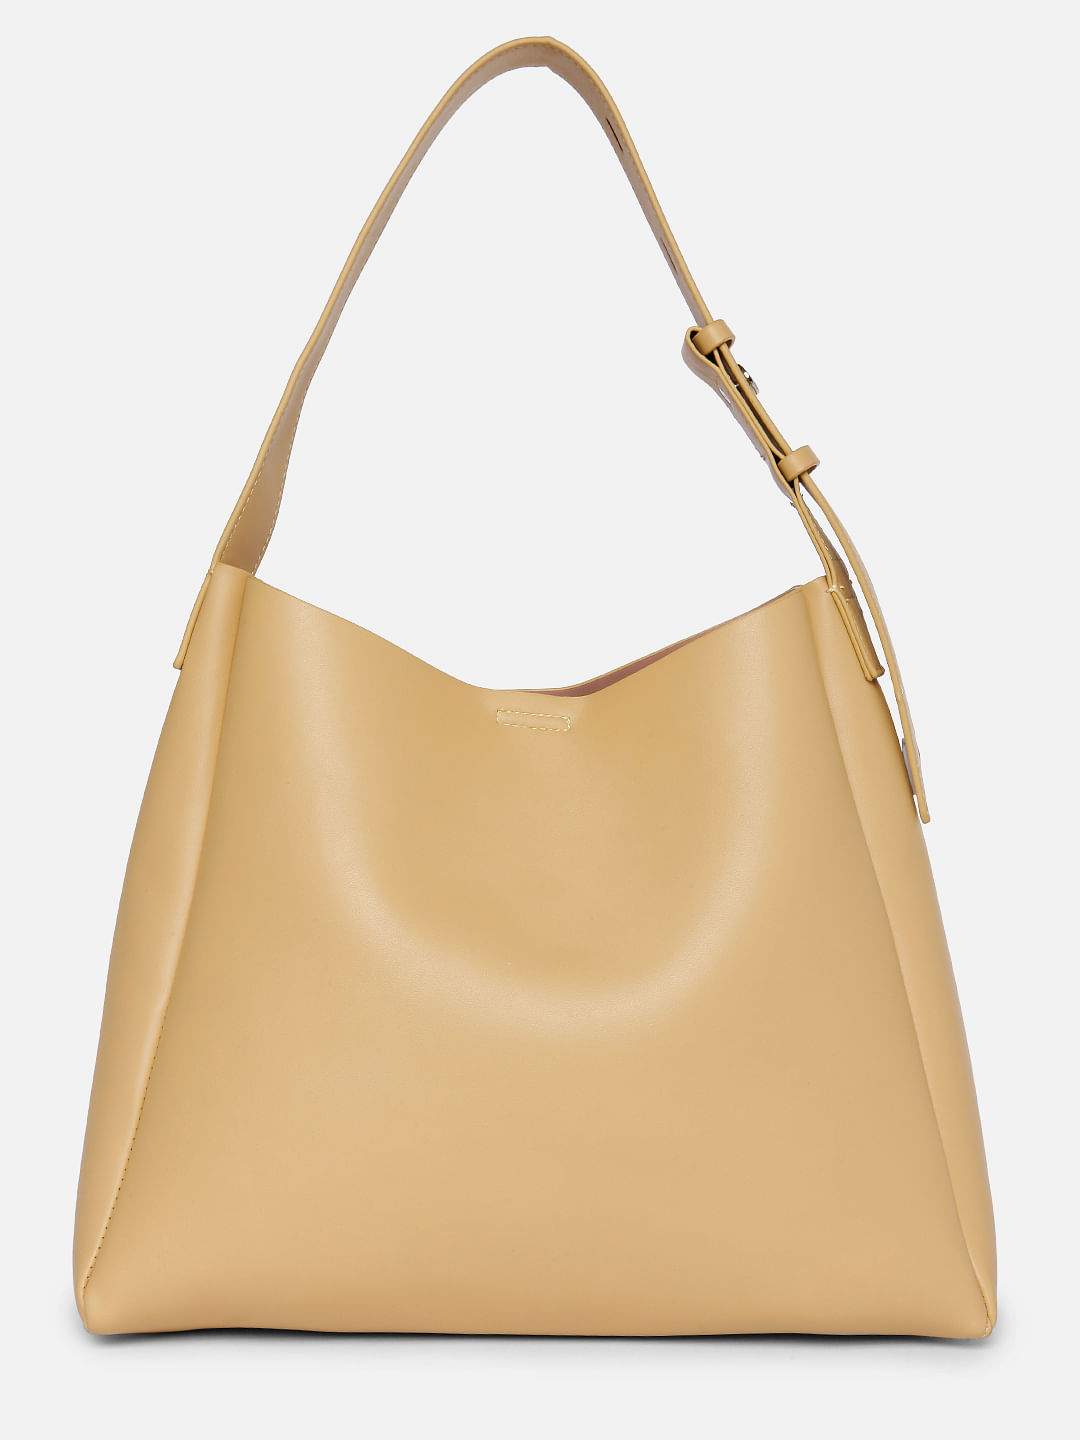 Maxbell Stylish Women Handbag Tote Durable Shoulder Bag for Travel Shopping  Vacation Light Yellow - Aladdin Shoppers at Rs 2485.00, New Delhi | ID:  2852161854230